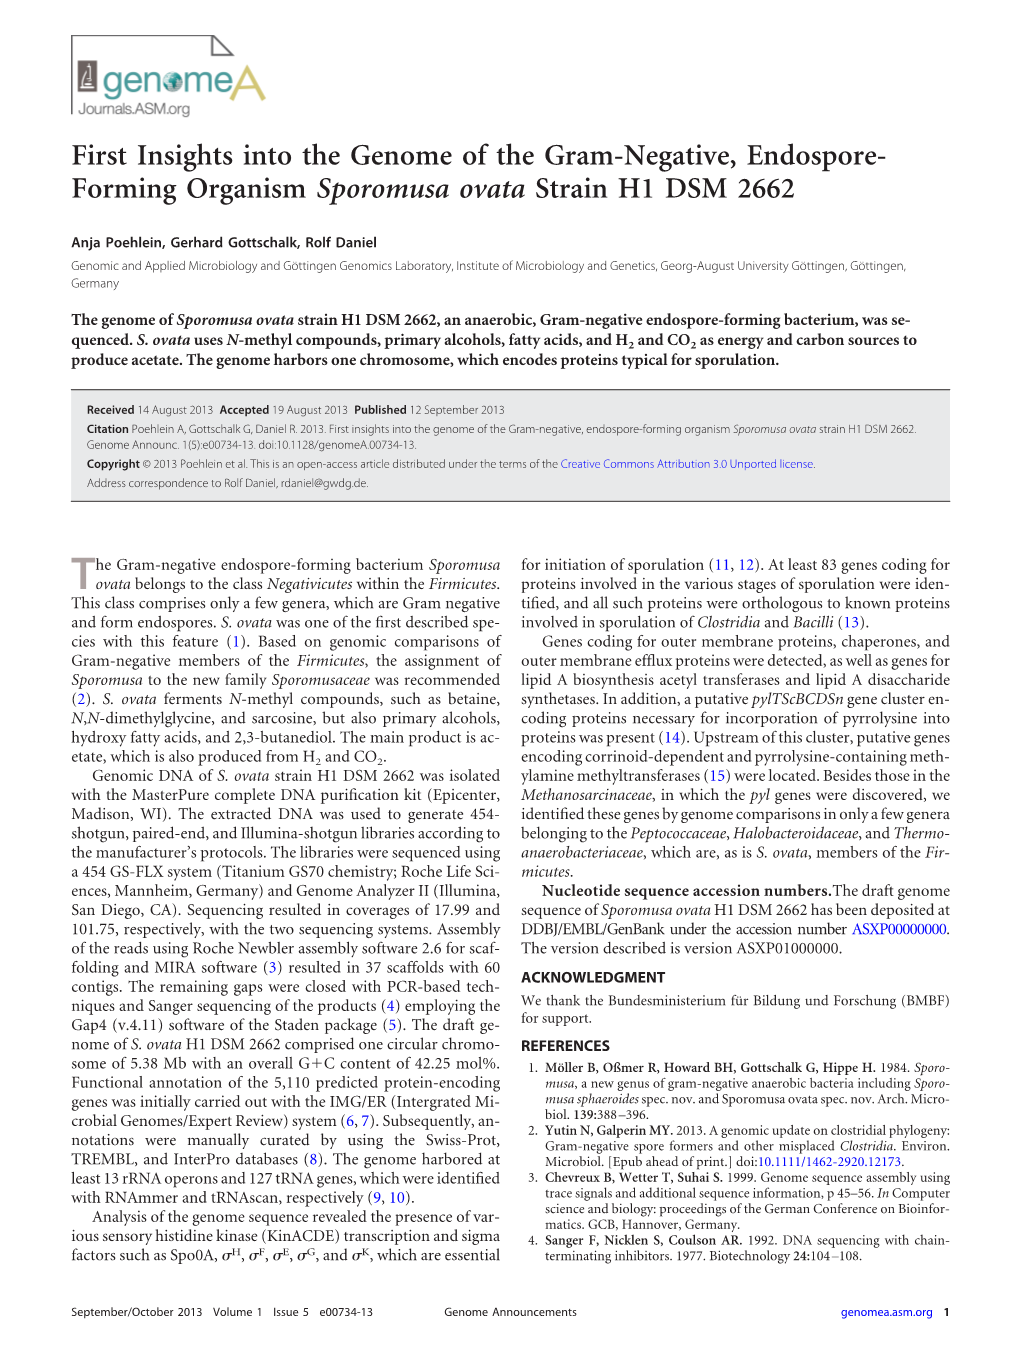 Forming Organism Sporomusa Ovata Strain H1 DSM 2662